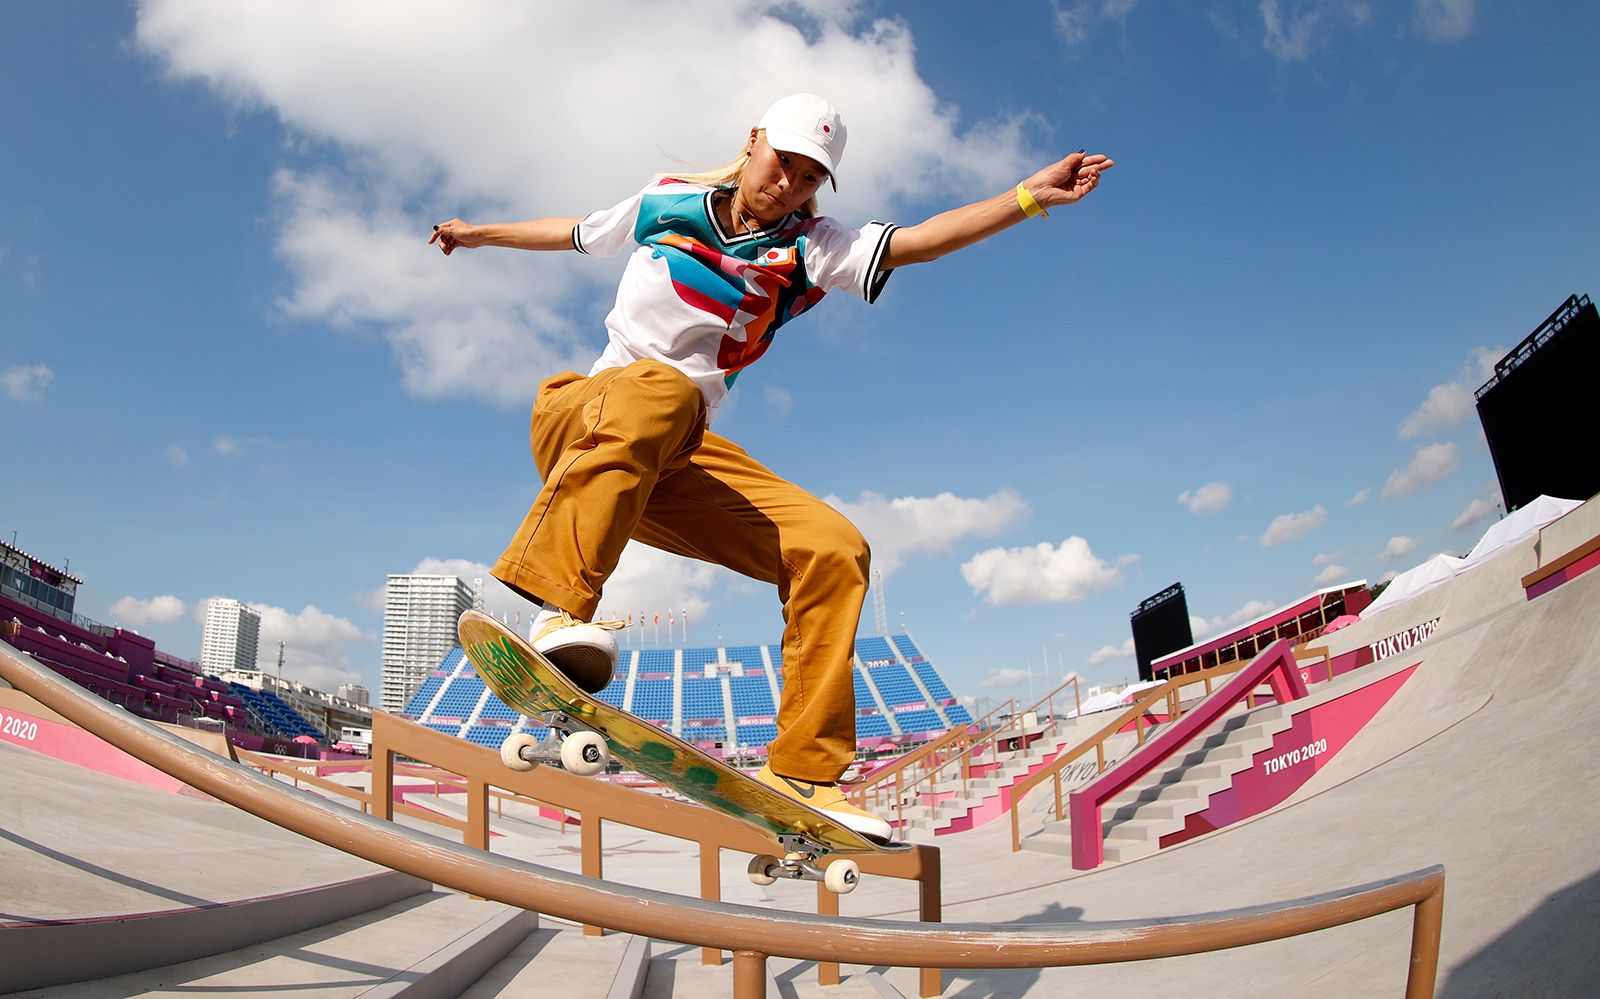 Skate Board Skater Gifts For Teens Skateboard Boys Clothes T-Shirt